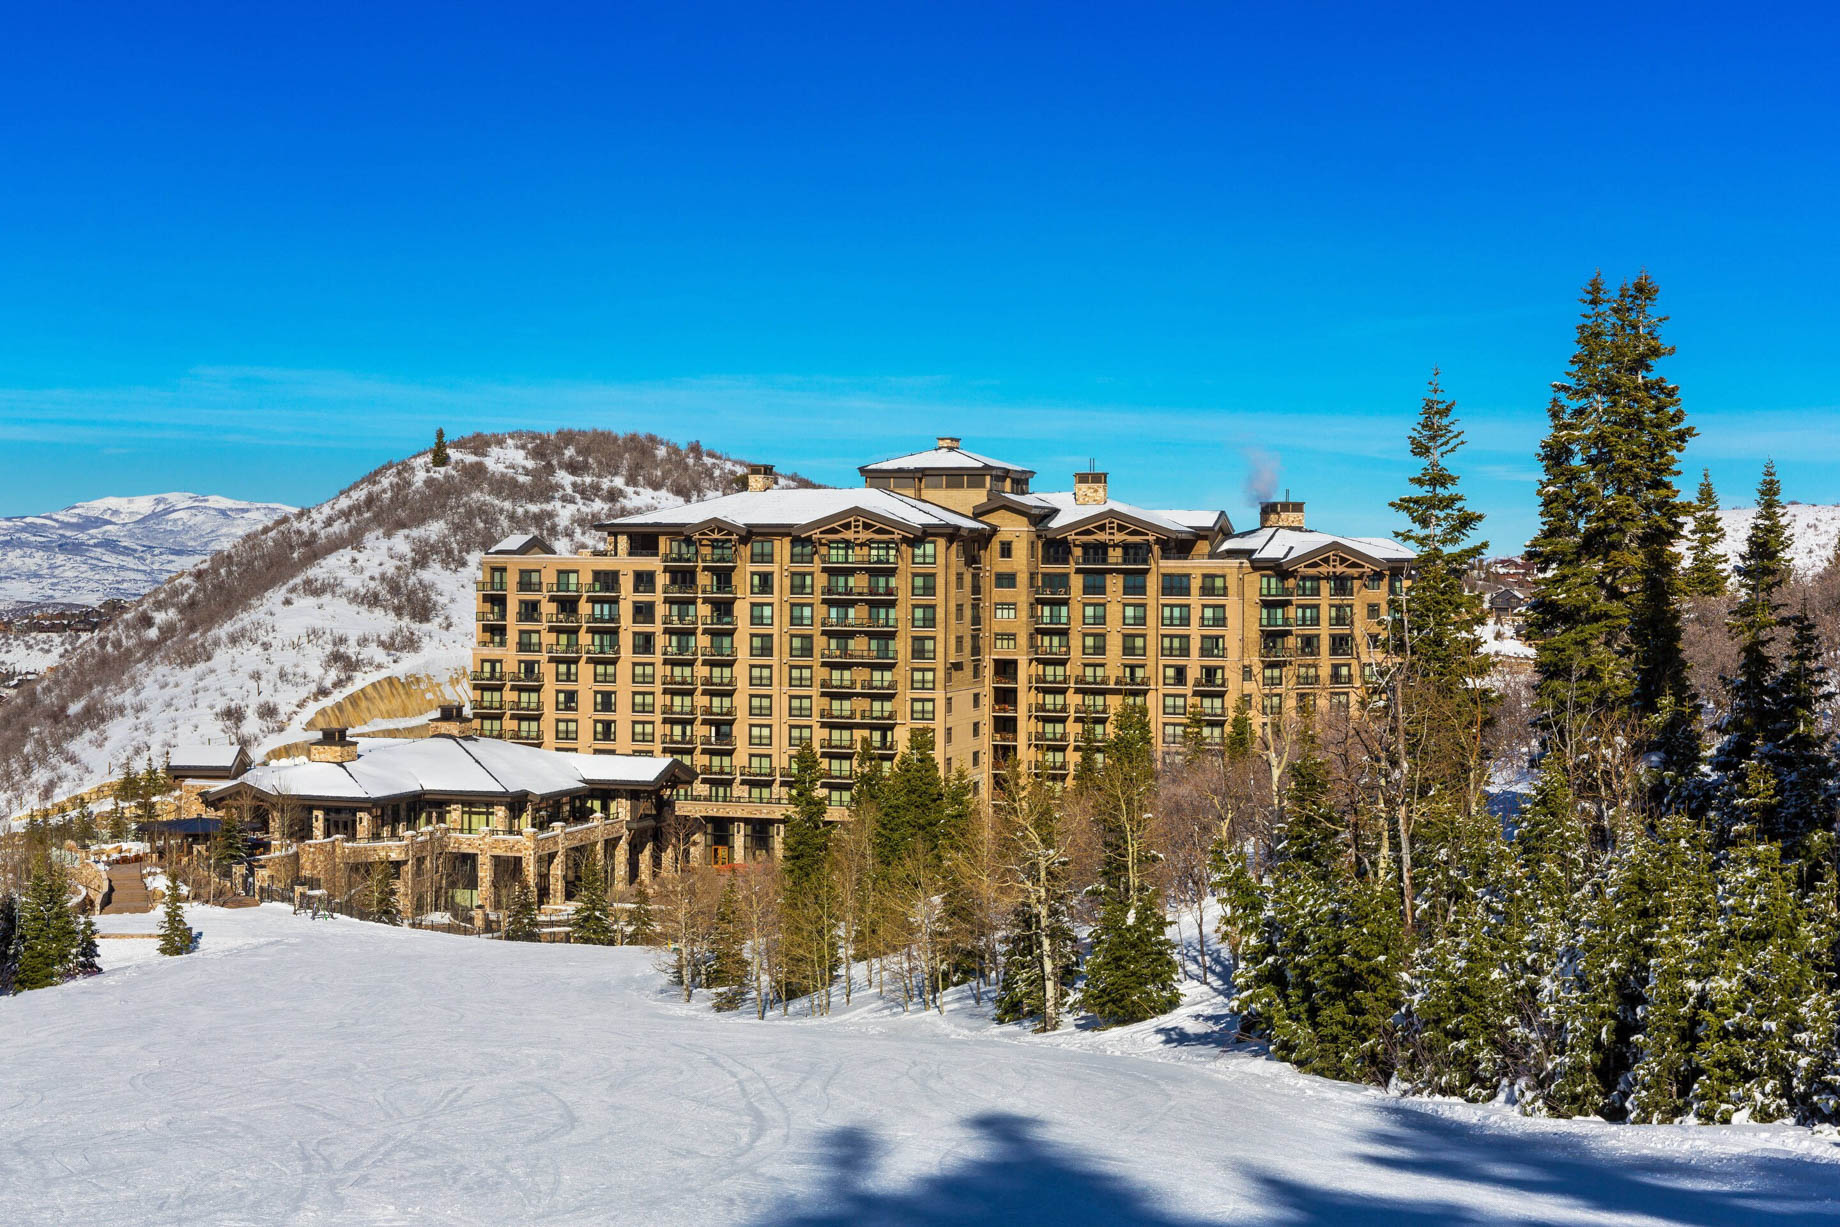 The St. Regis Deer Valley Resort – Park City, UT, USA – Exterior Winter Snow View